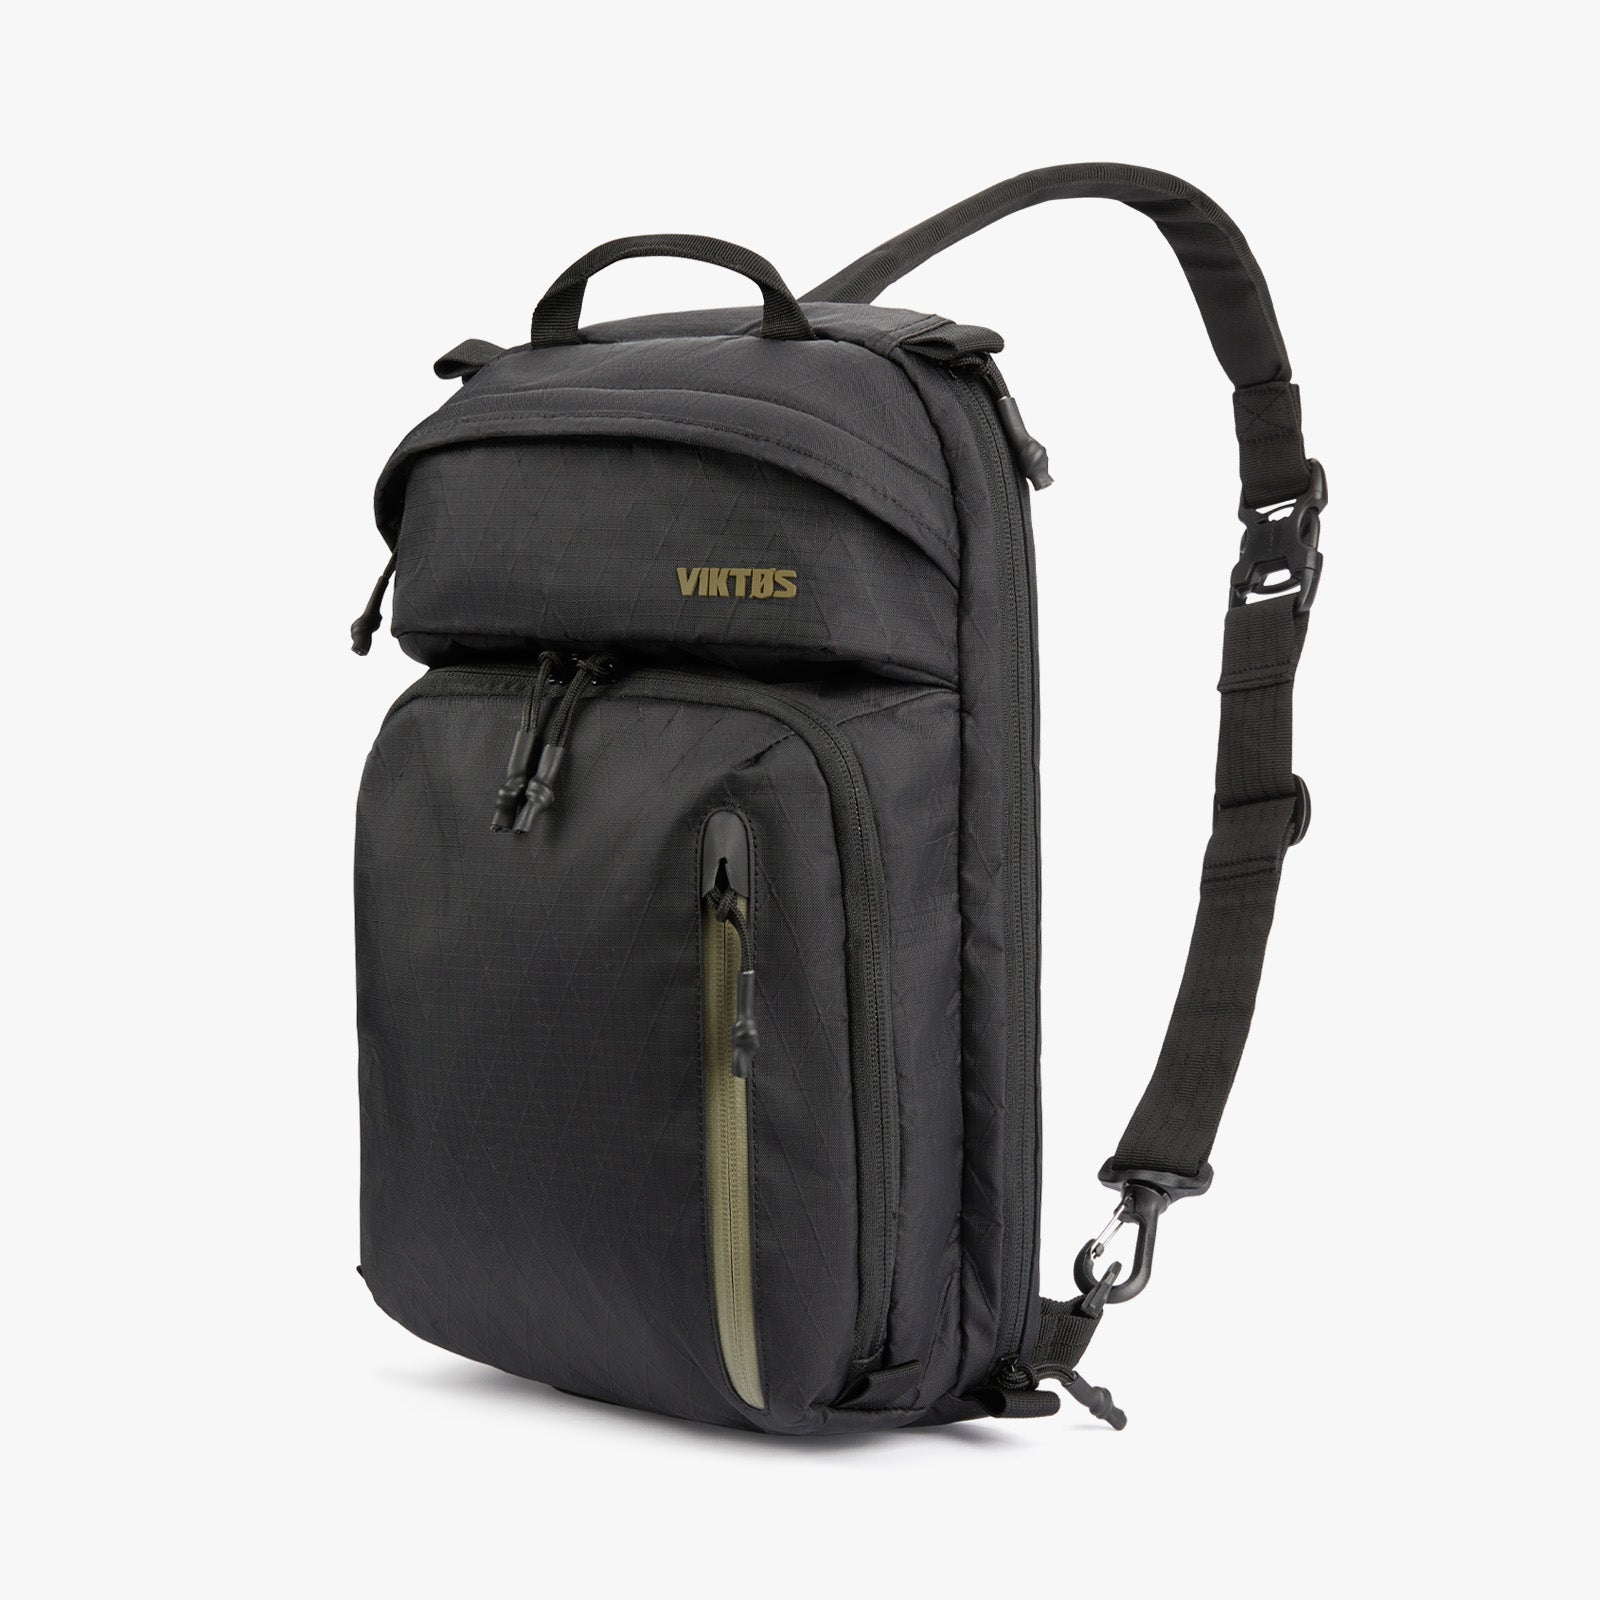 VIKTOS Upscale XL Slingbag Bags, Packs and Cases VIKTOS Nightfjall Tactical Gear Supplier Tactical Distributors Australia